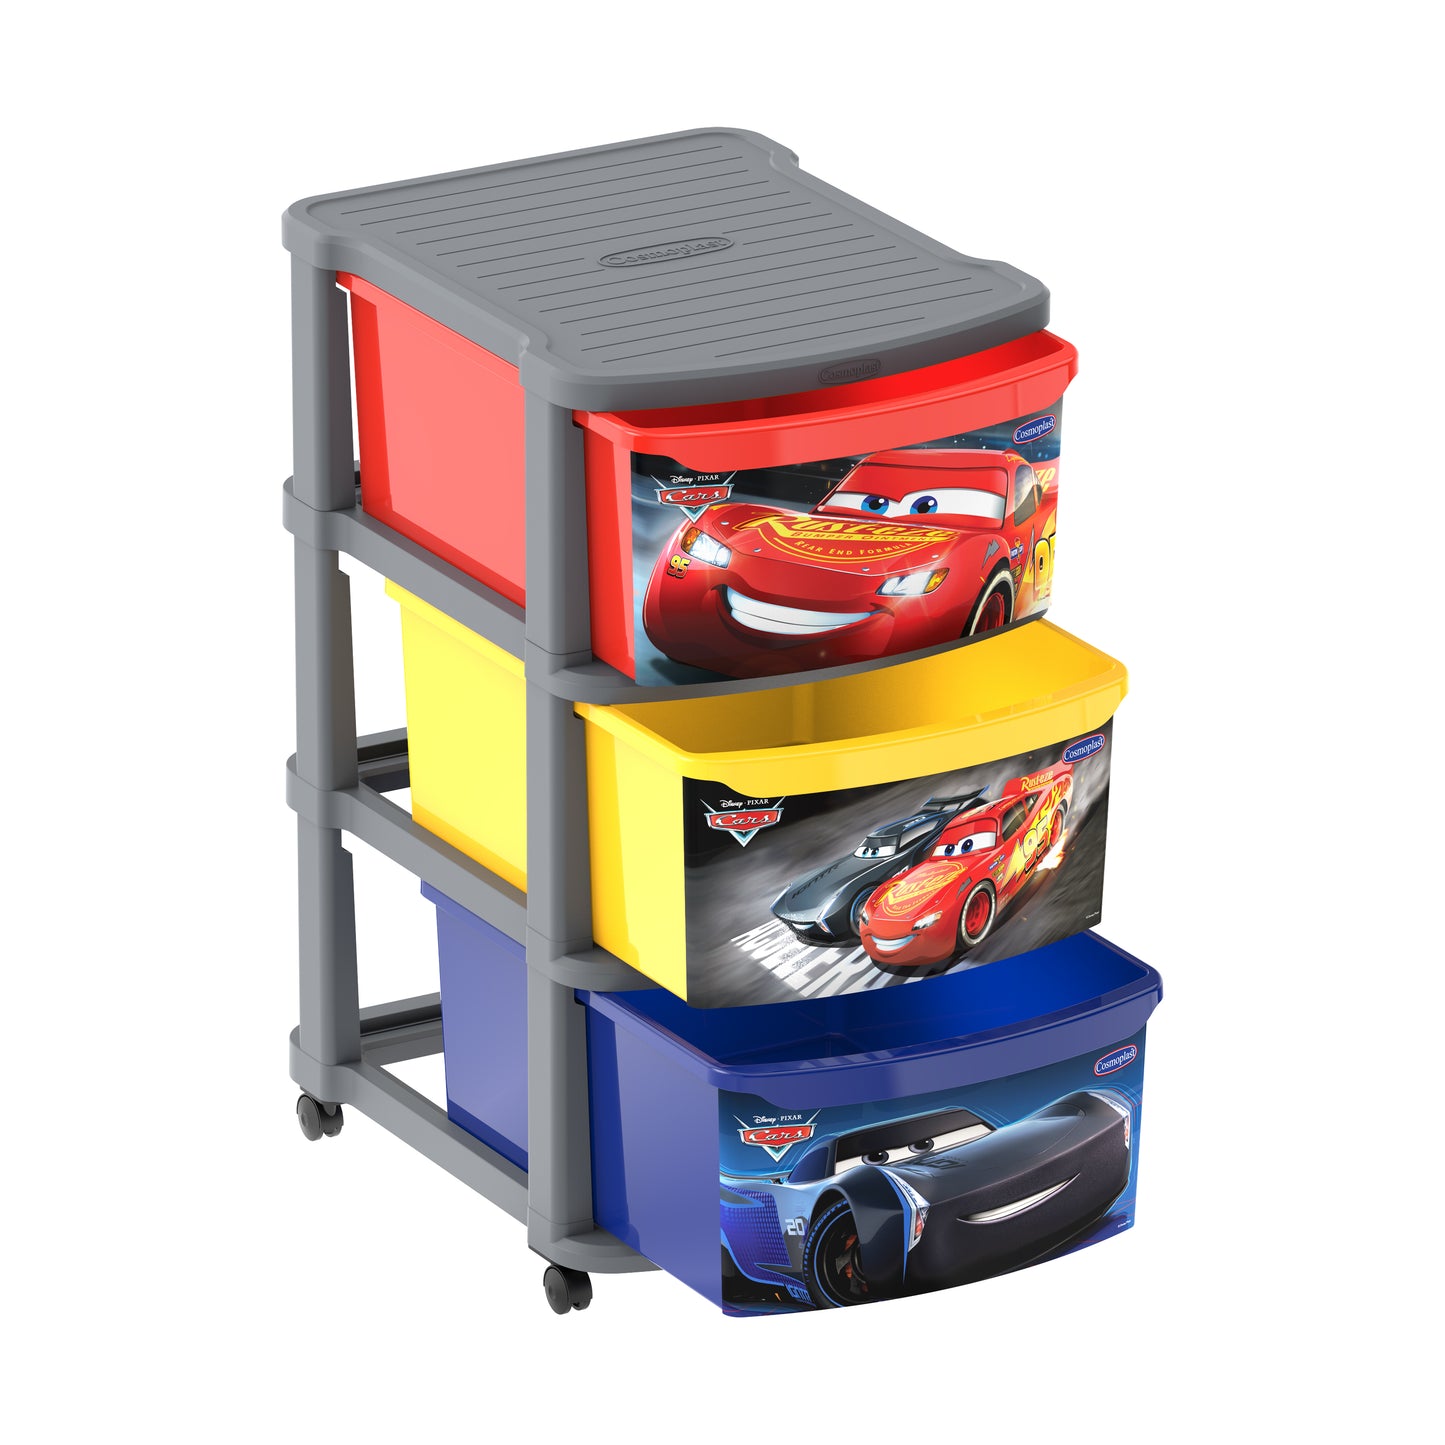 Cosmoplast Disney Pixar Cars Multipurpose Storage Cabinet 3 with Wheels